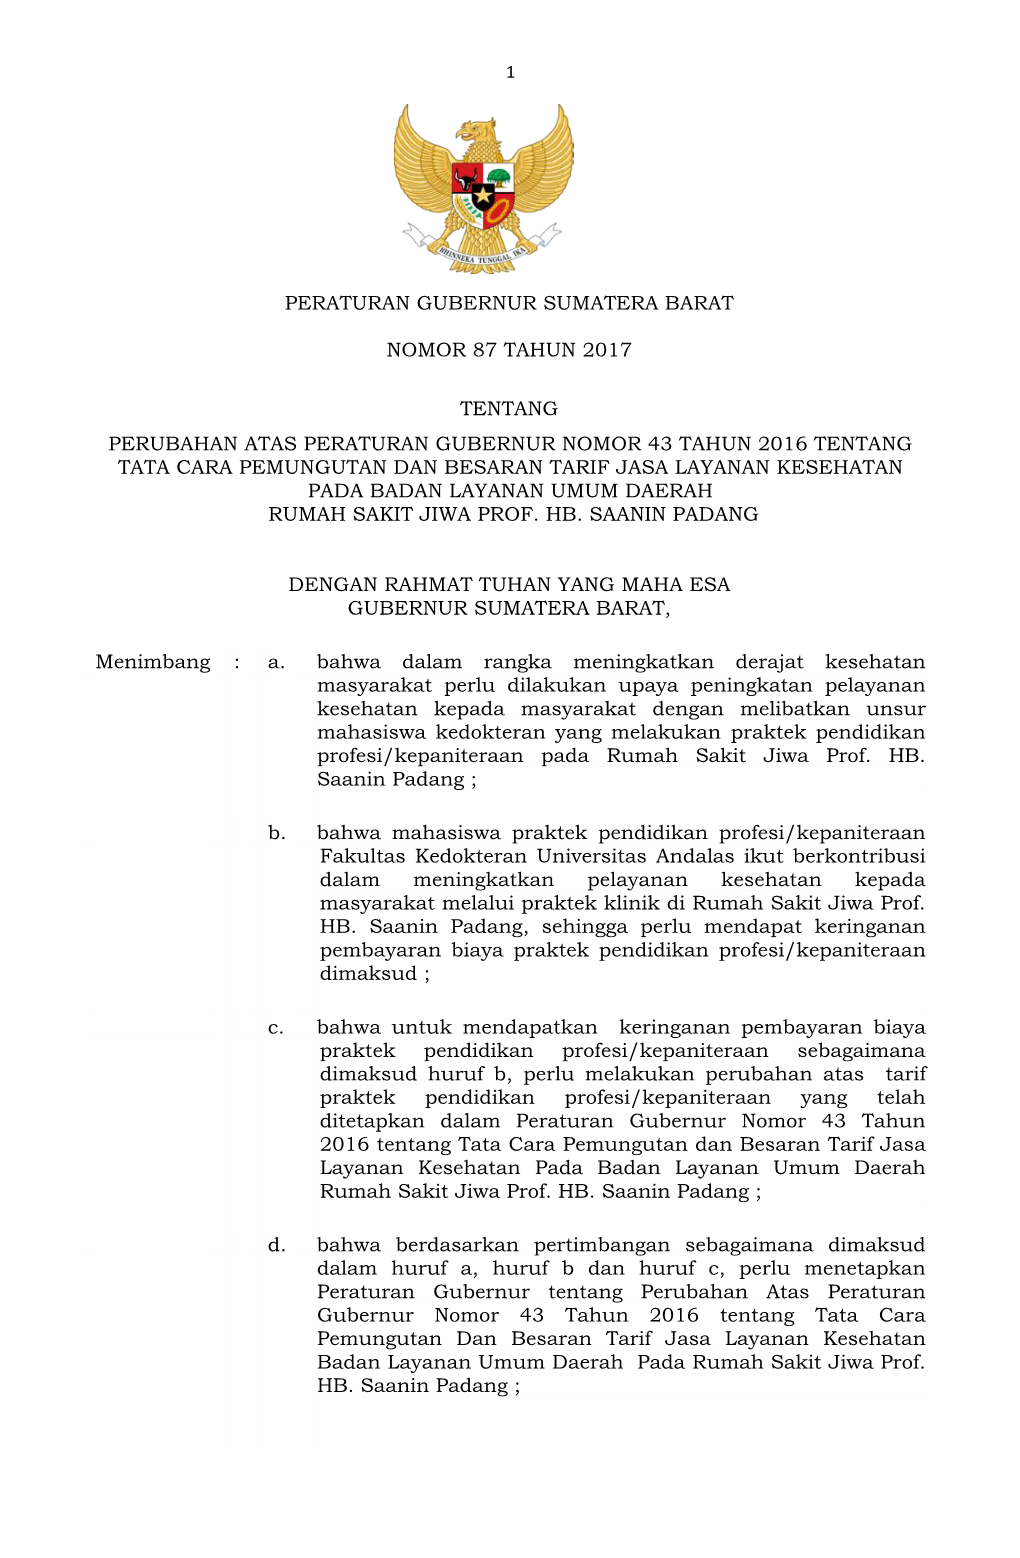 Peraturan Gubernur Sumatera Barat Nomor 87 Tahun 2017